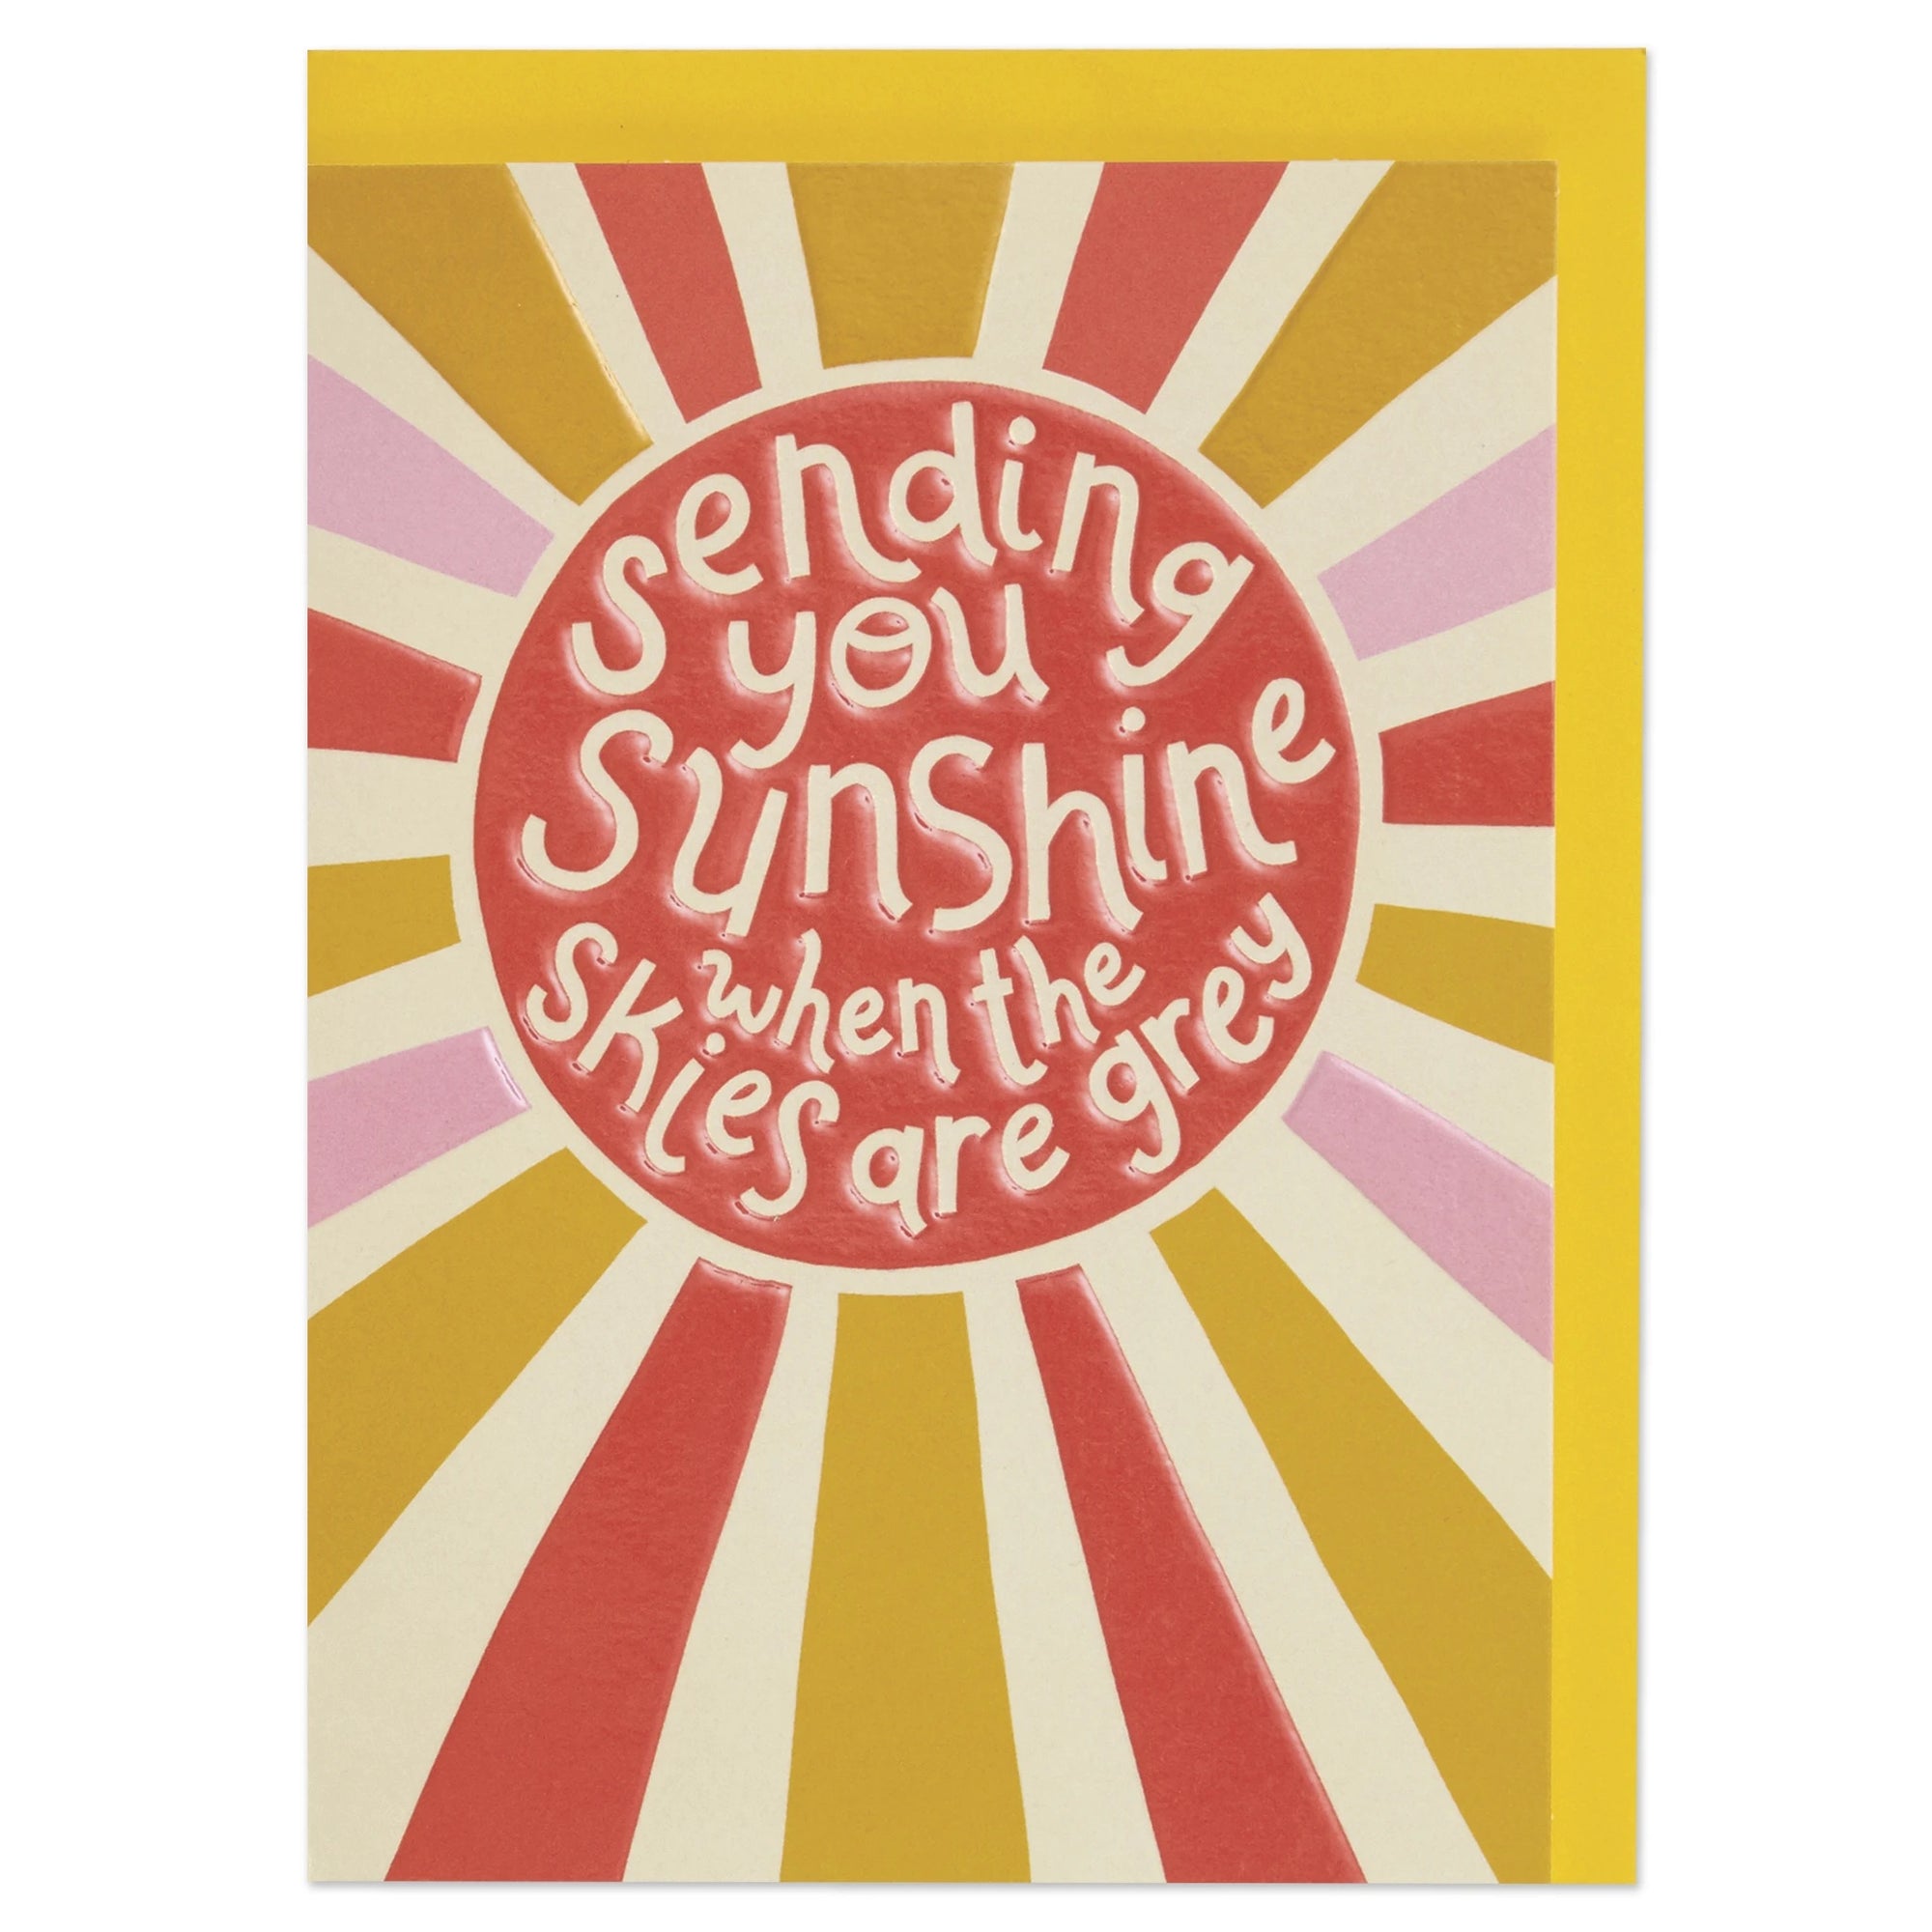 Sending you sunshine -Card